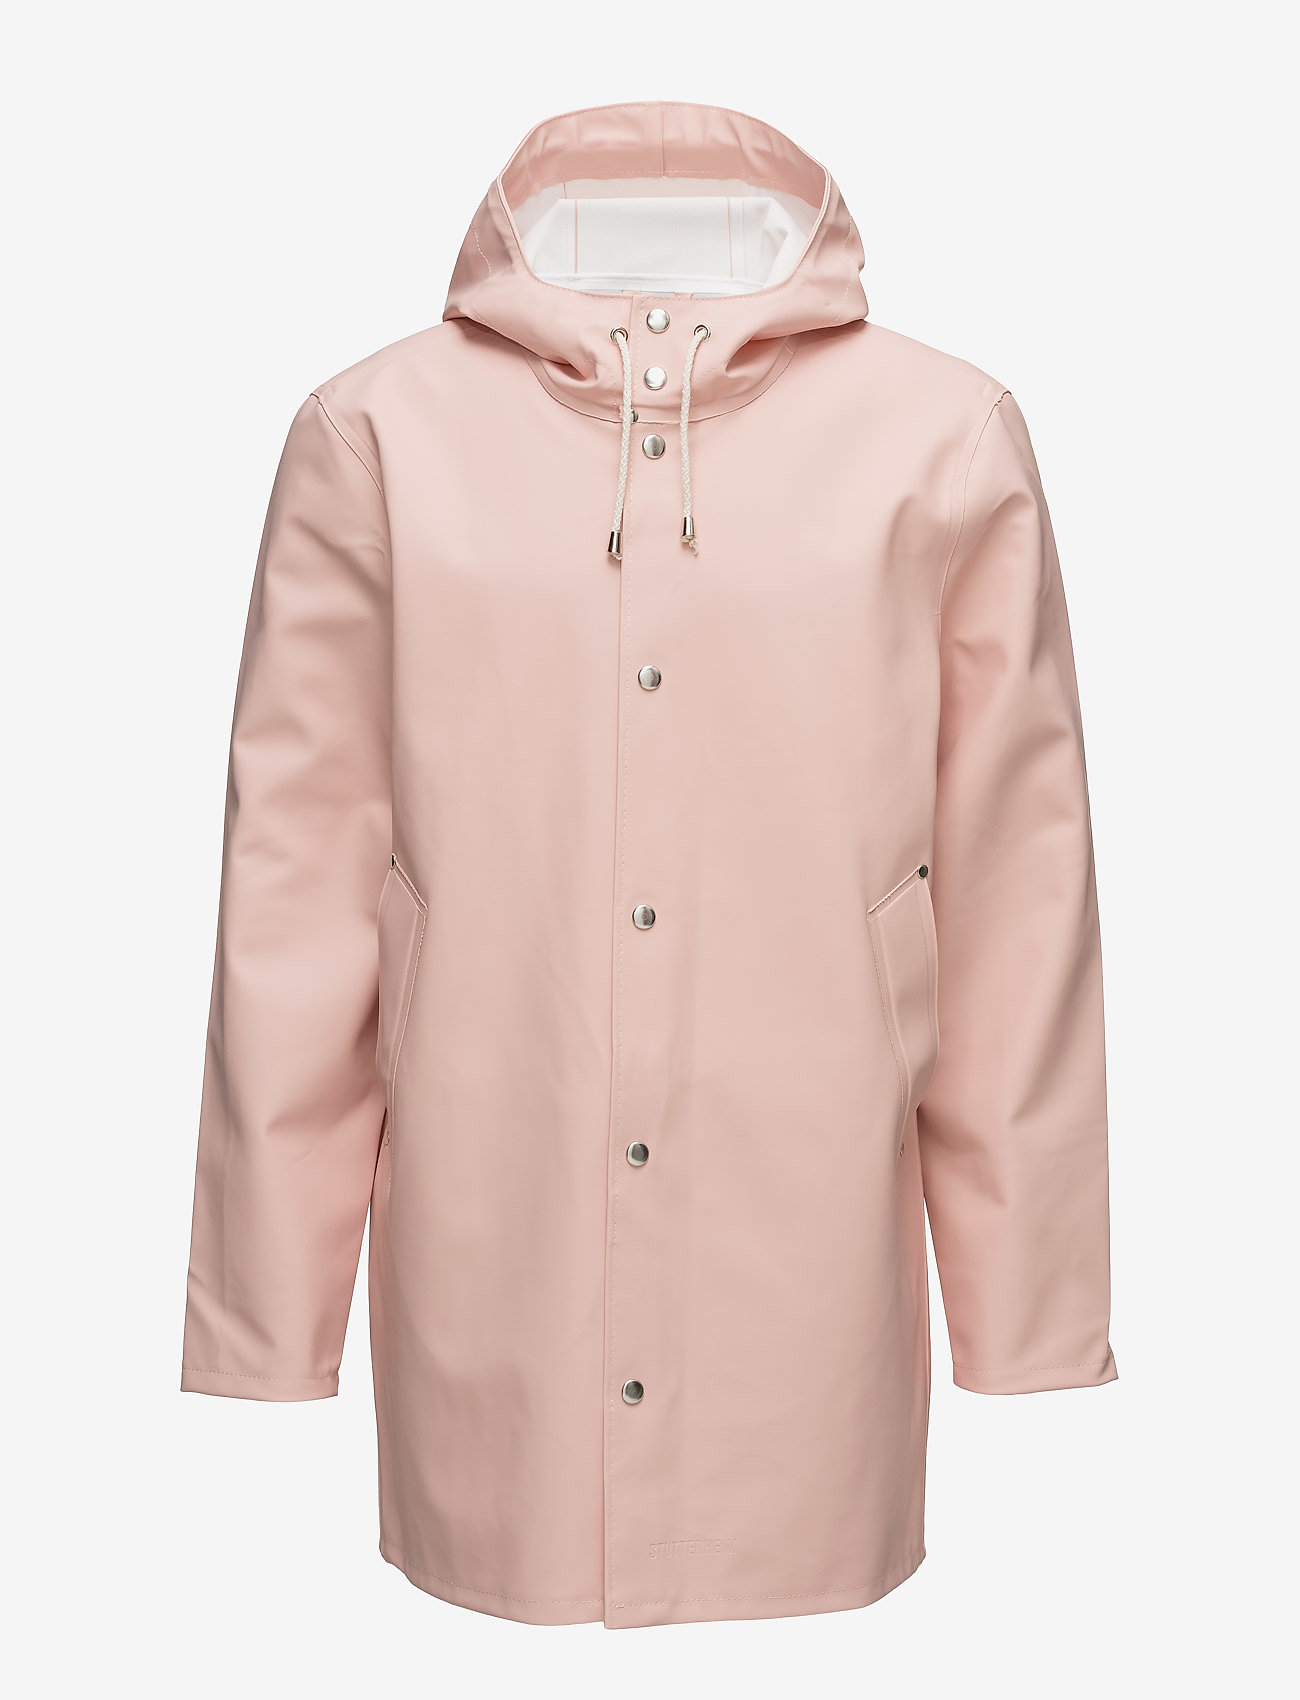 Stutterheim - Stockholm - spring jackets - pale pink - 1